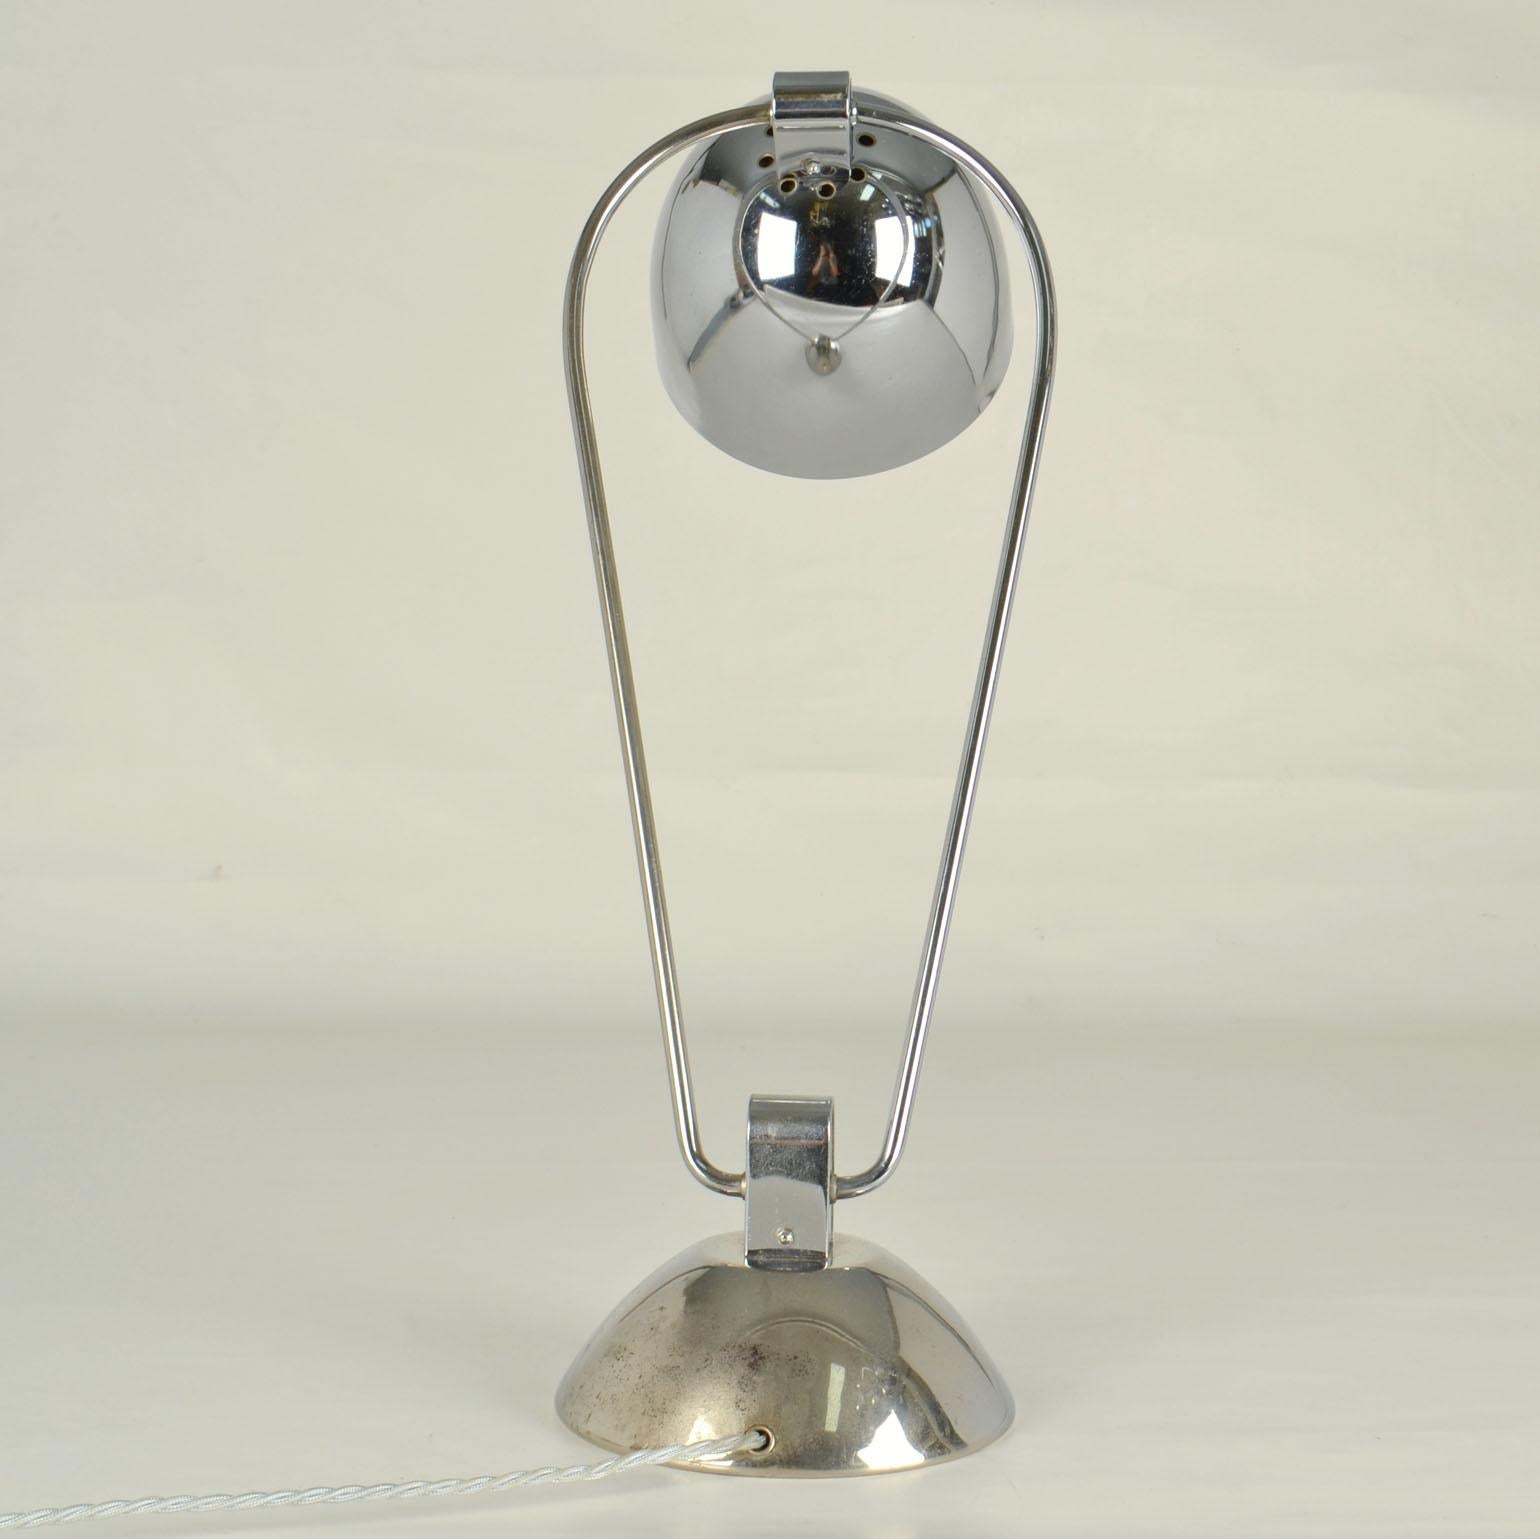  Modernist Desk Lamp Jumo designed by Yves Jujeau and André Mounique For Sale 8